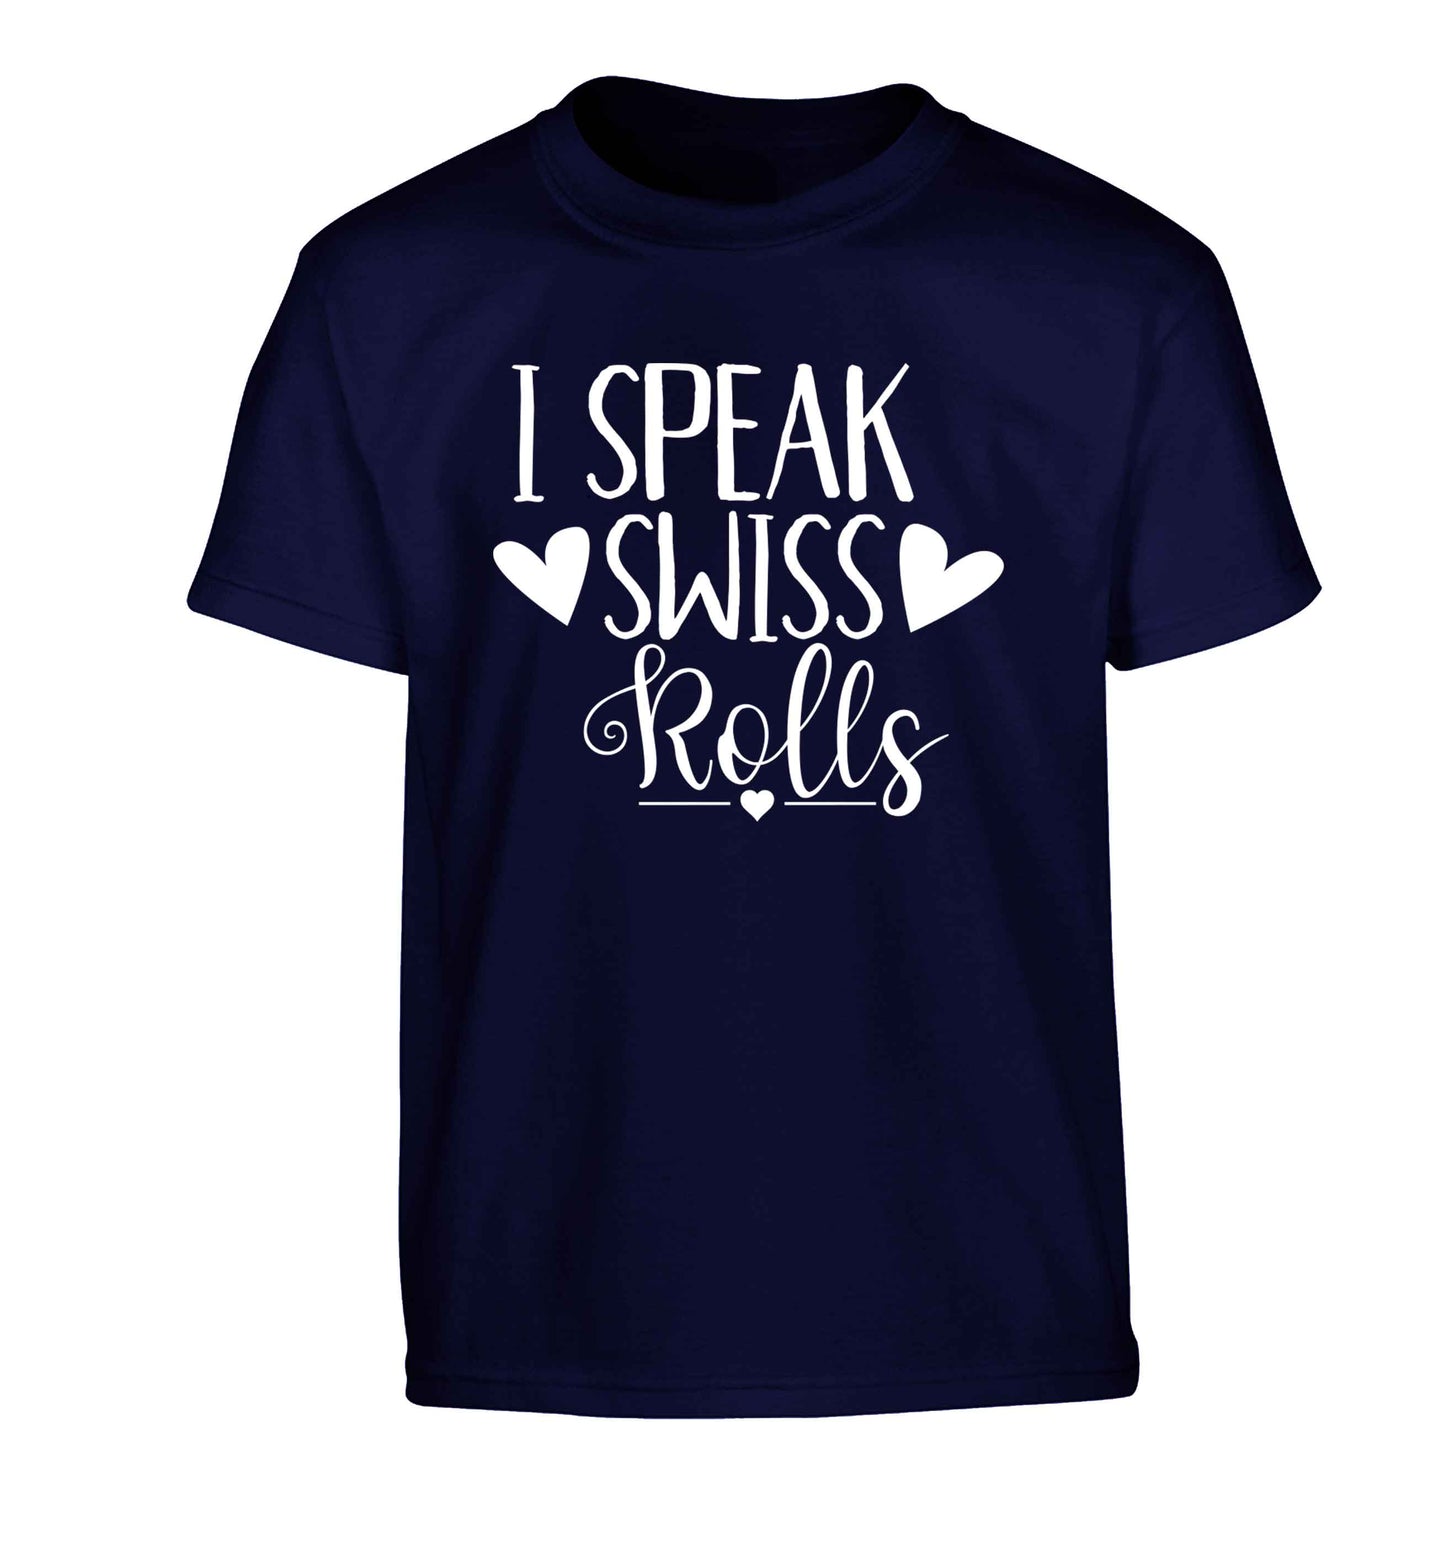 I speak swiss..rolls Children's navy Tshirt 12-13 Years